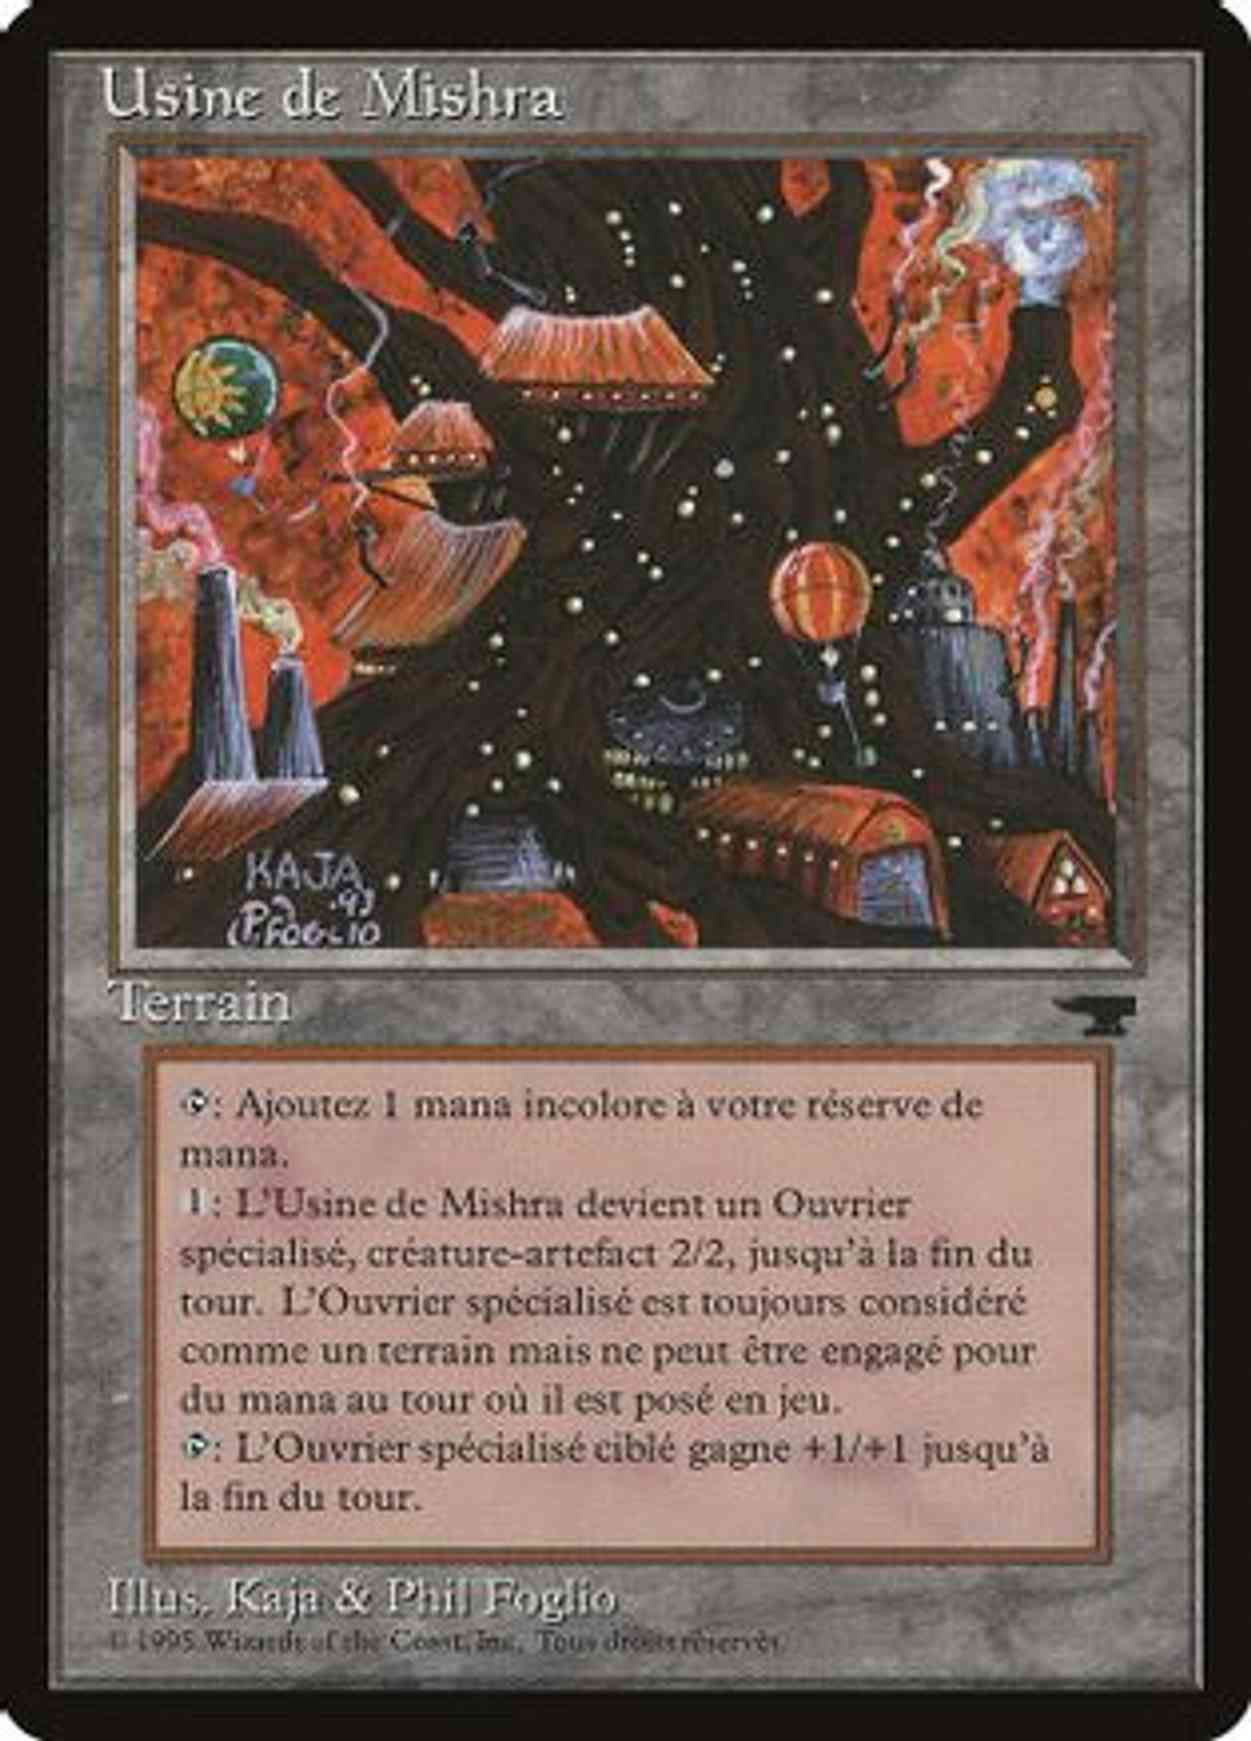 Mishra's Factory (French) - "Usine de Mishra" magic card front